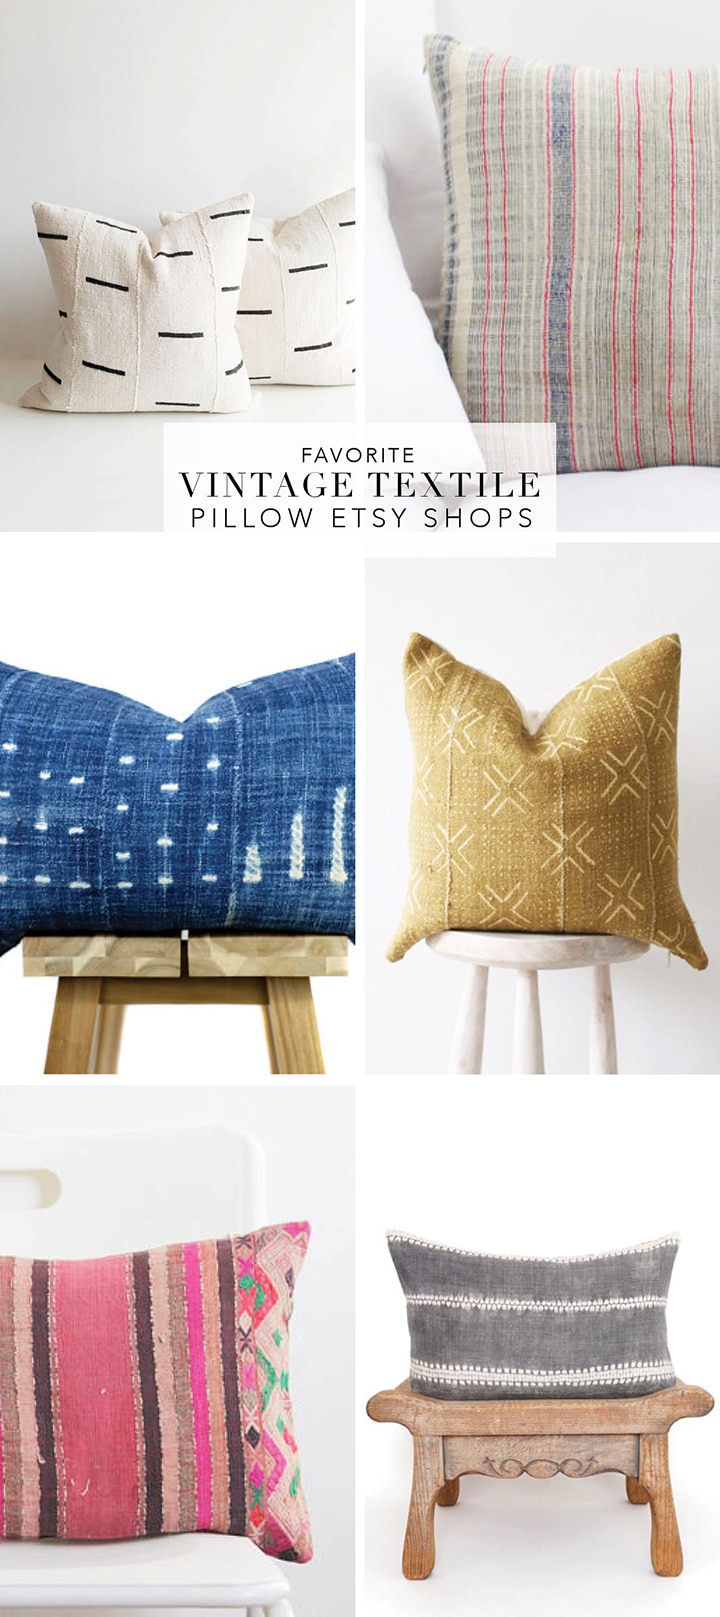 Our favorite vintage textile pillow shops on Etsy.